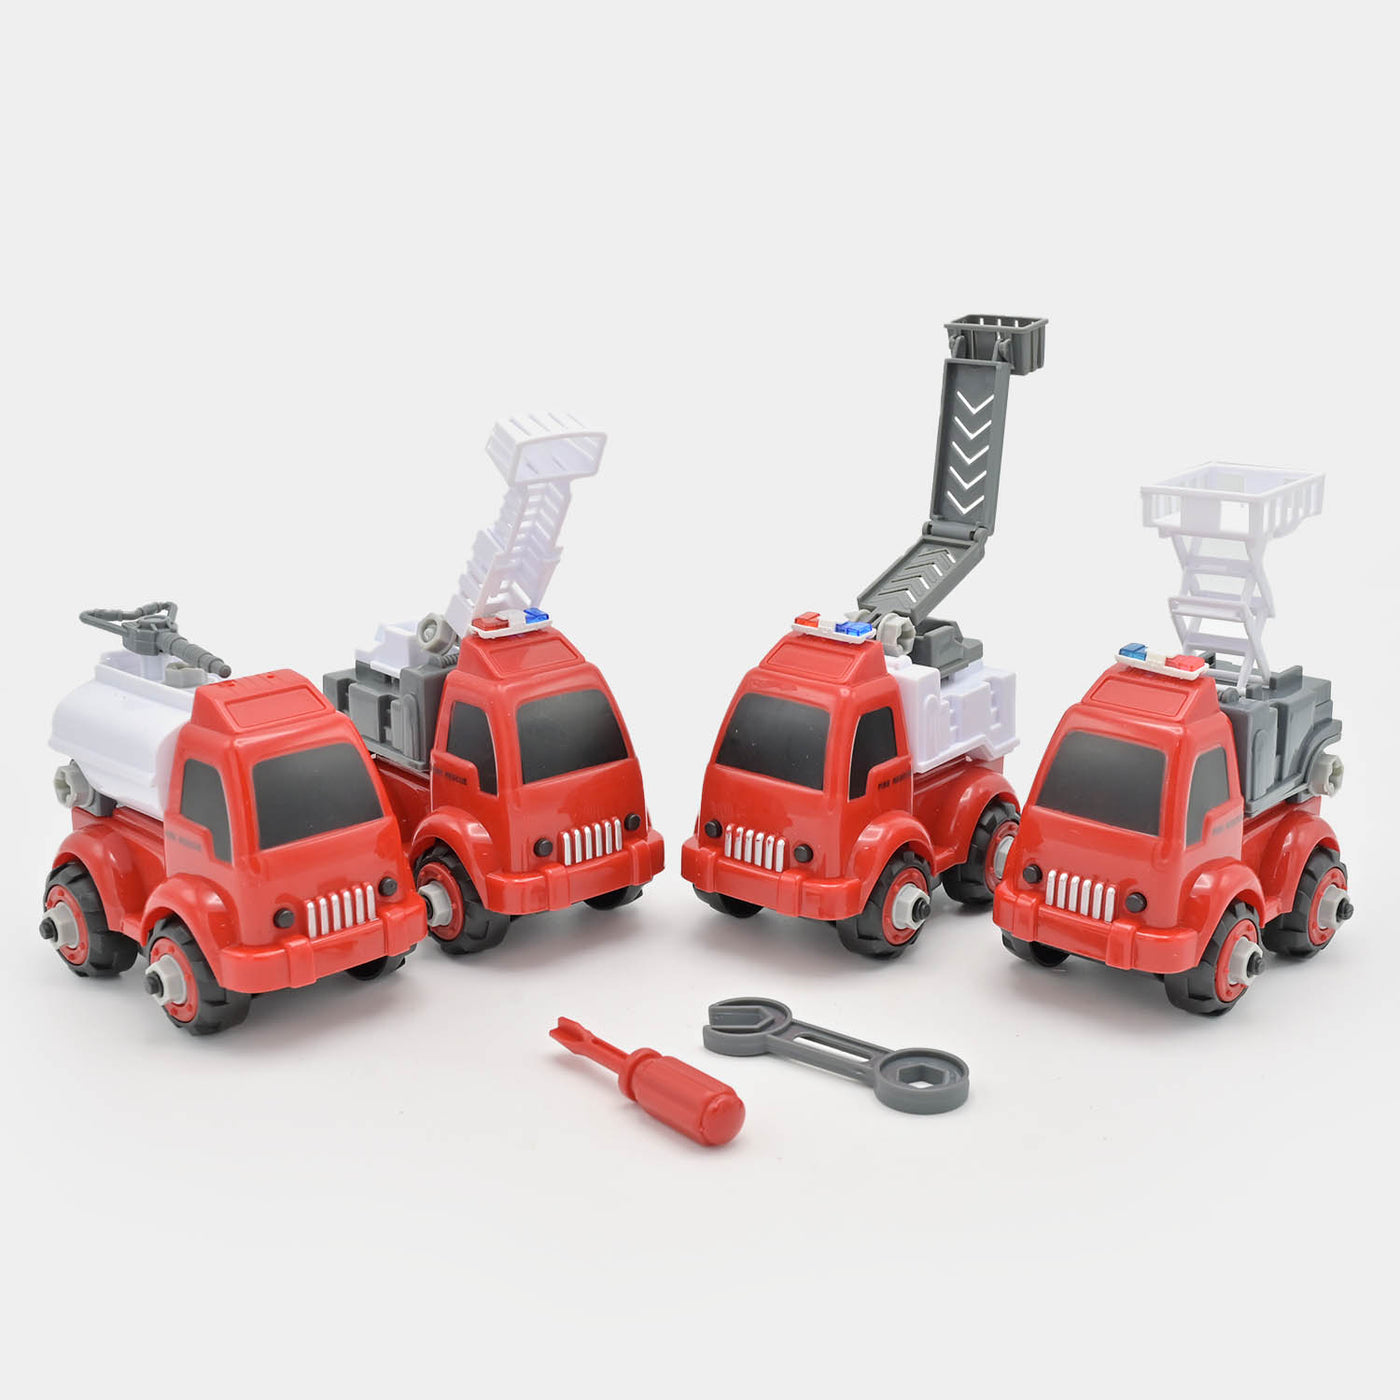 Rescue Vehicles 4PCs Play Set Toy